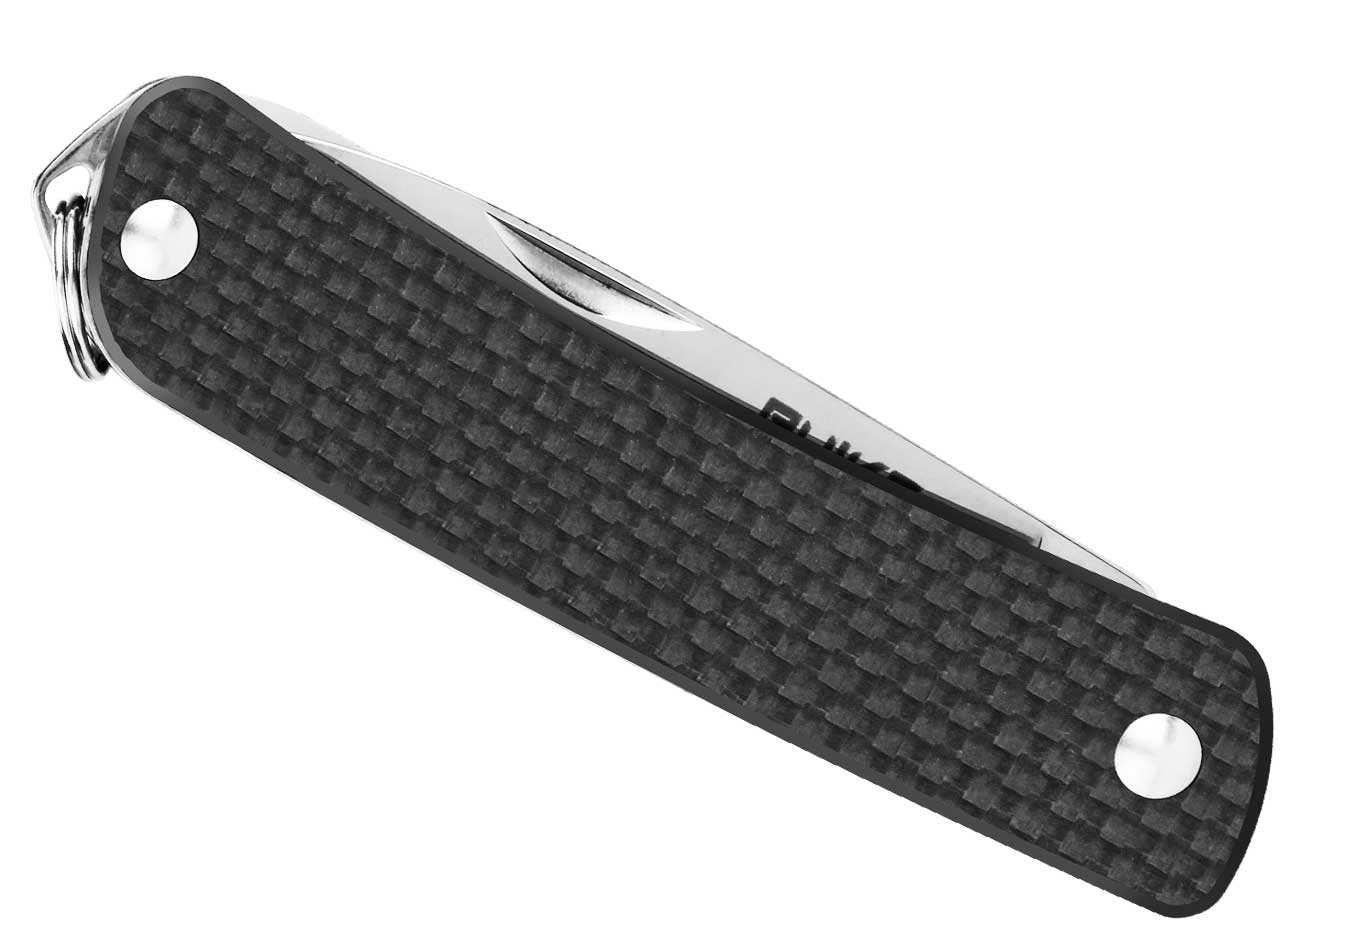 Ruike S31 Multifunctional Knife – Green